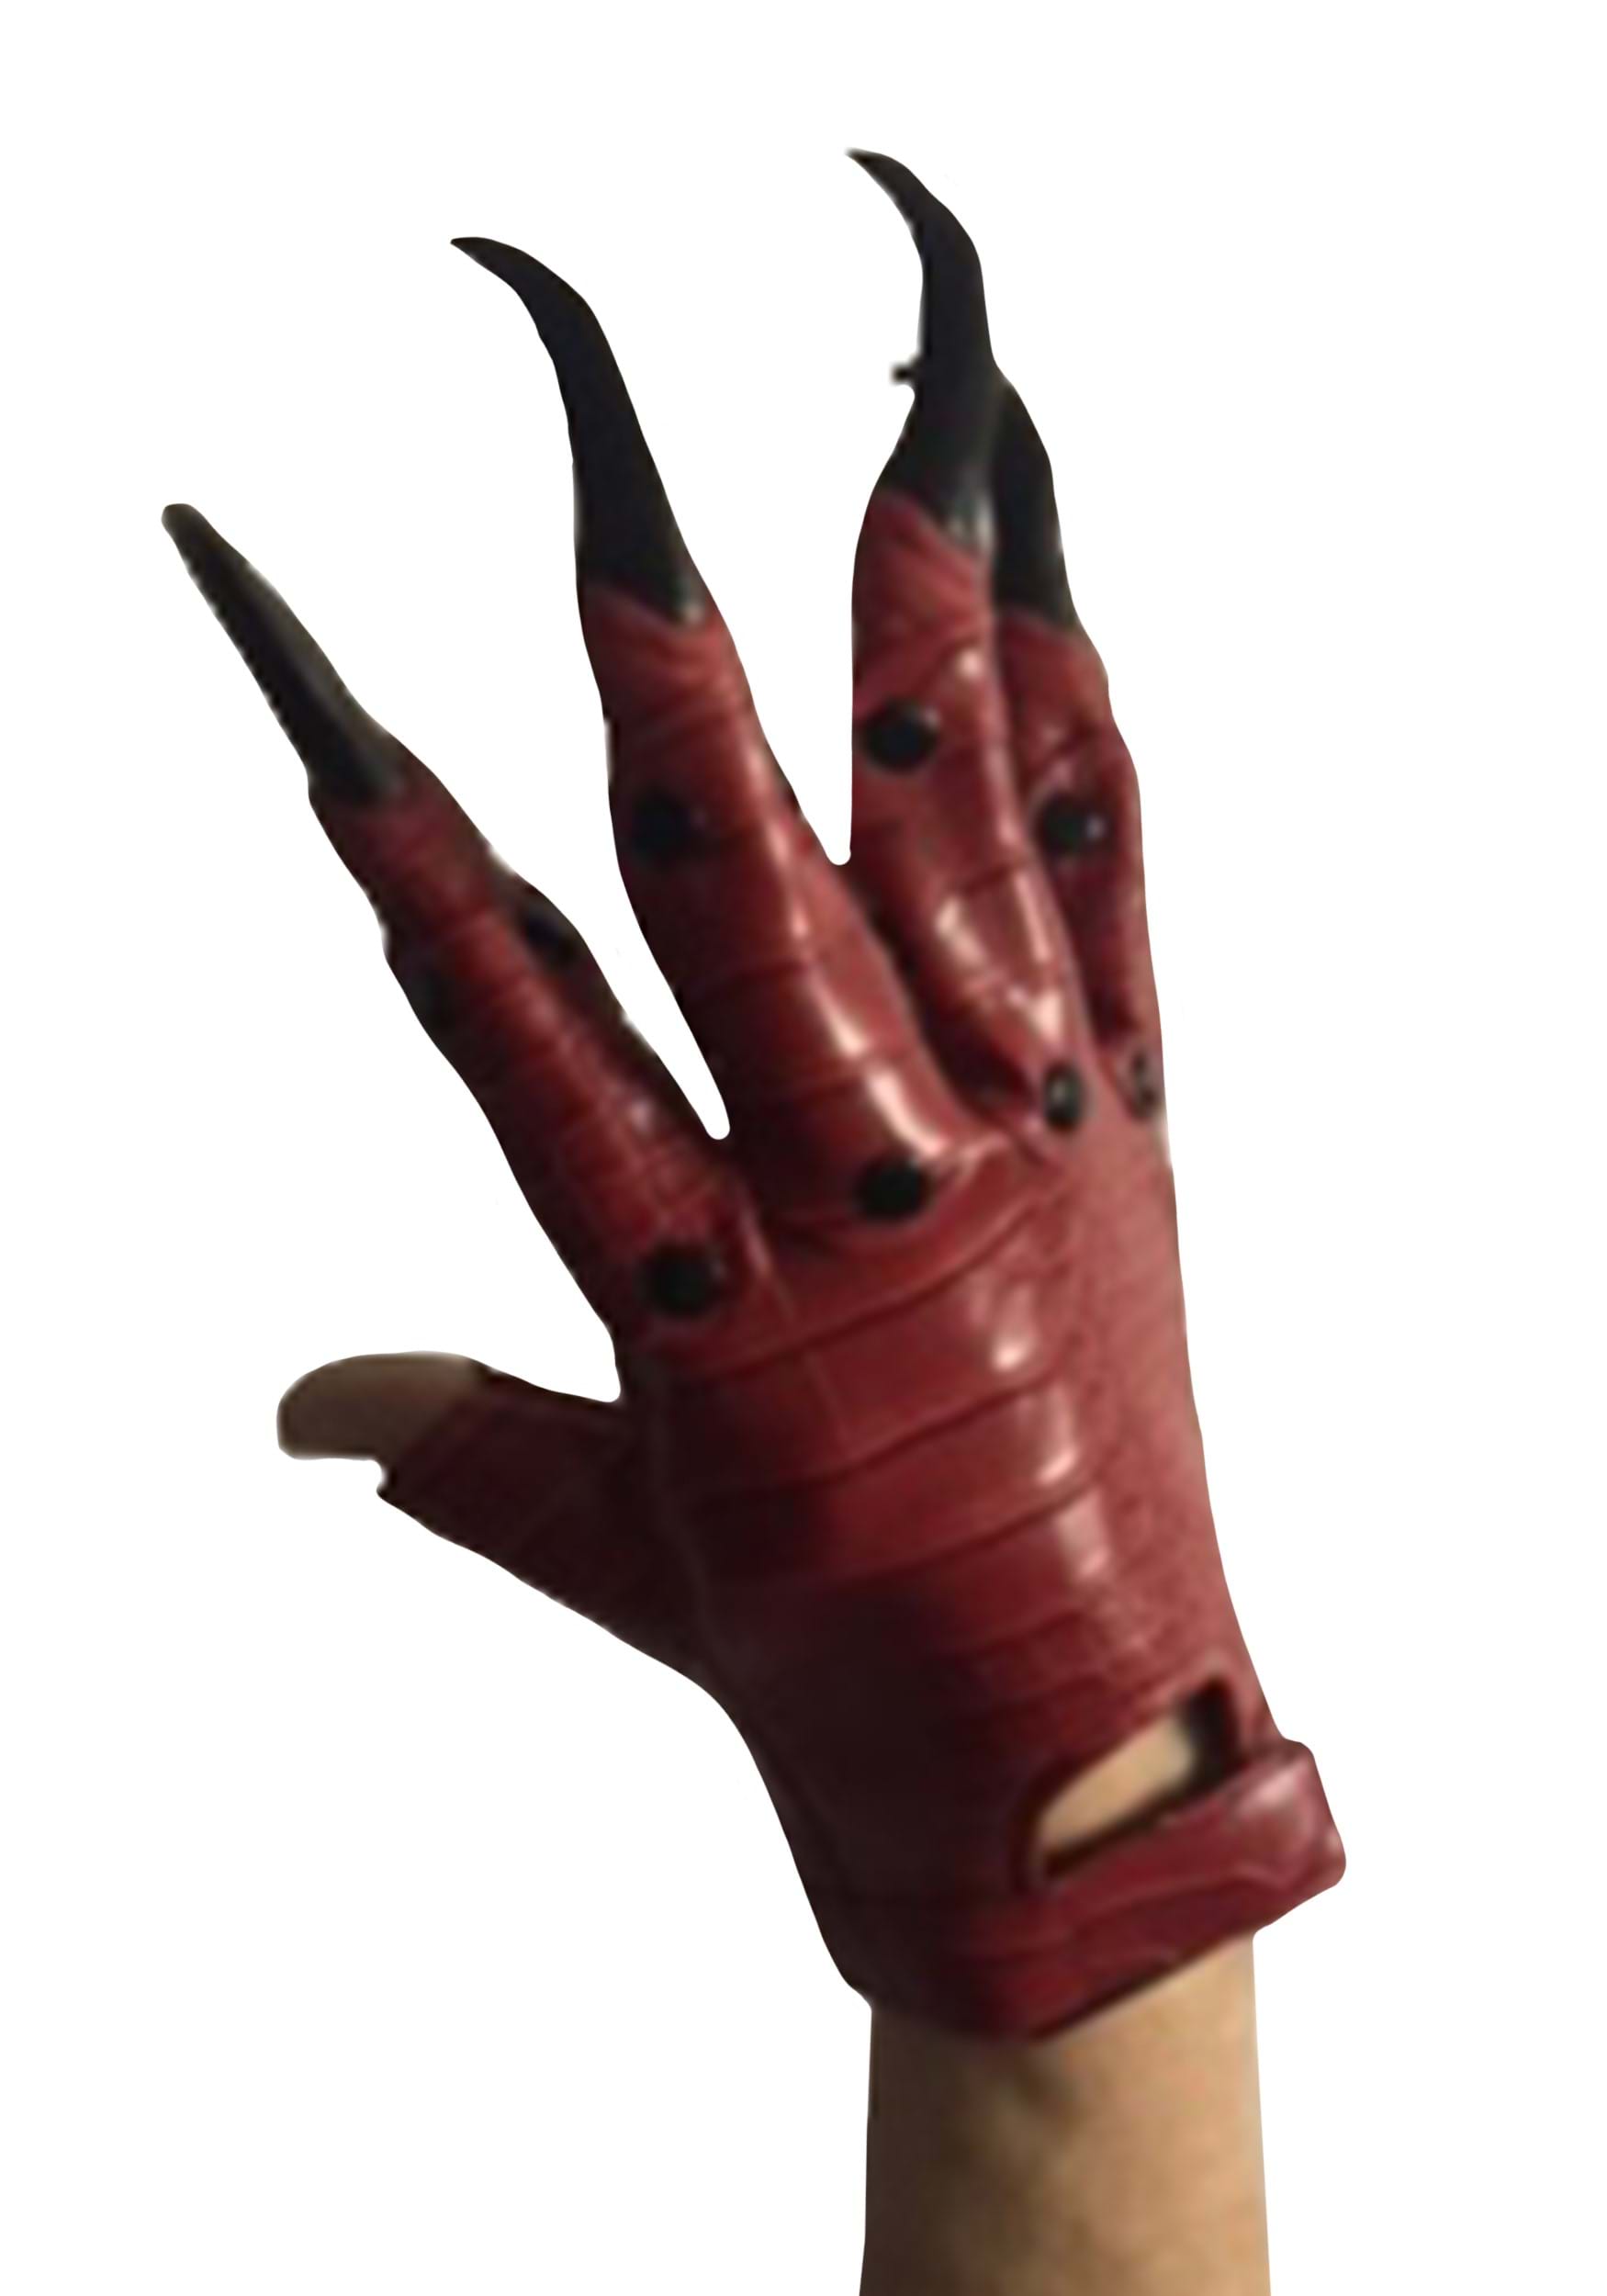 Adult Red Lucifero Devil Claw Gloves